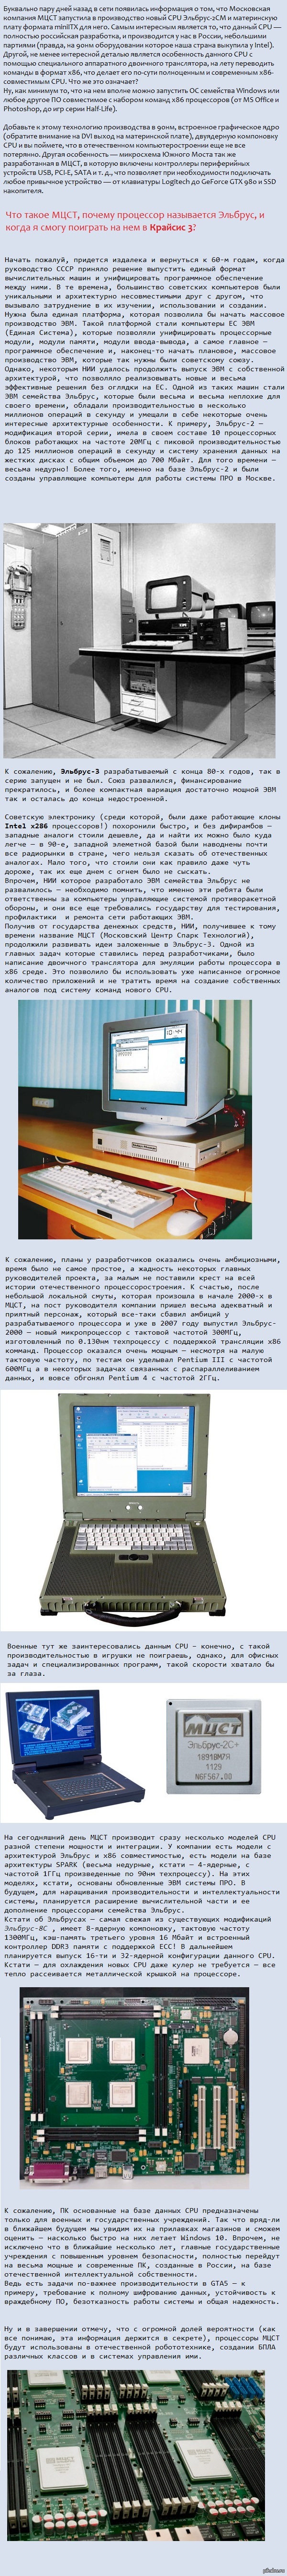   ,   x86        2+  miniITX   :  <a href="http://pikabu.ru/story/materinskaya_plata_monokubm_s_mikroprotsessorom_yelbrus2sm_2940833">http://pikabu.ru/story/_2940833</a>